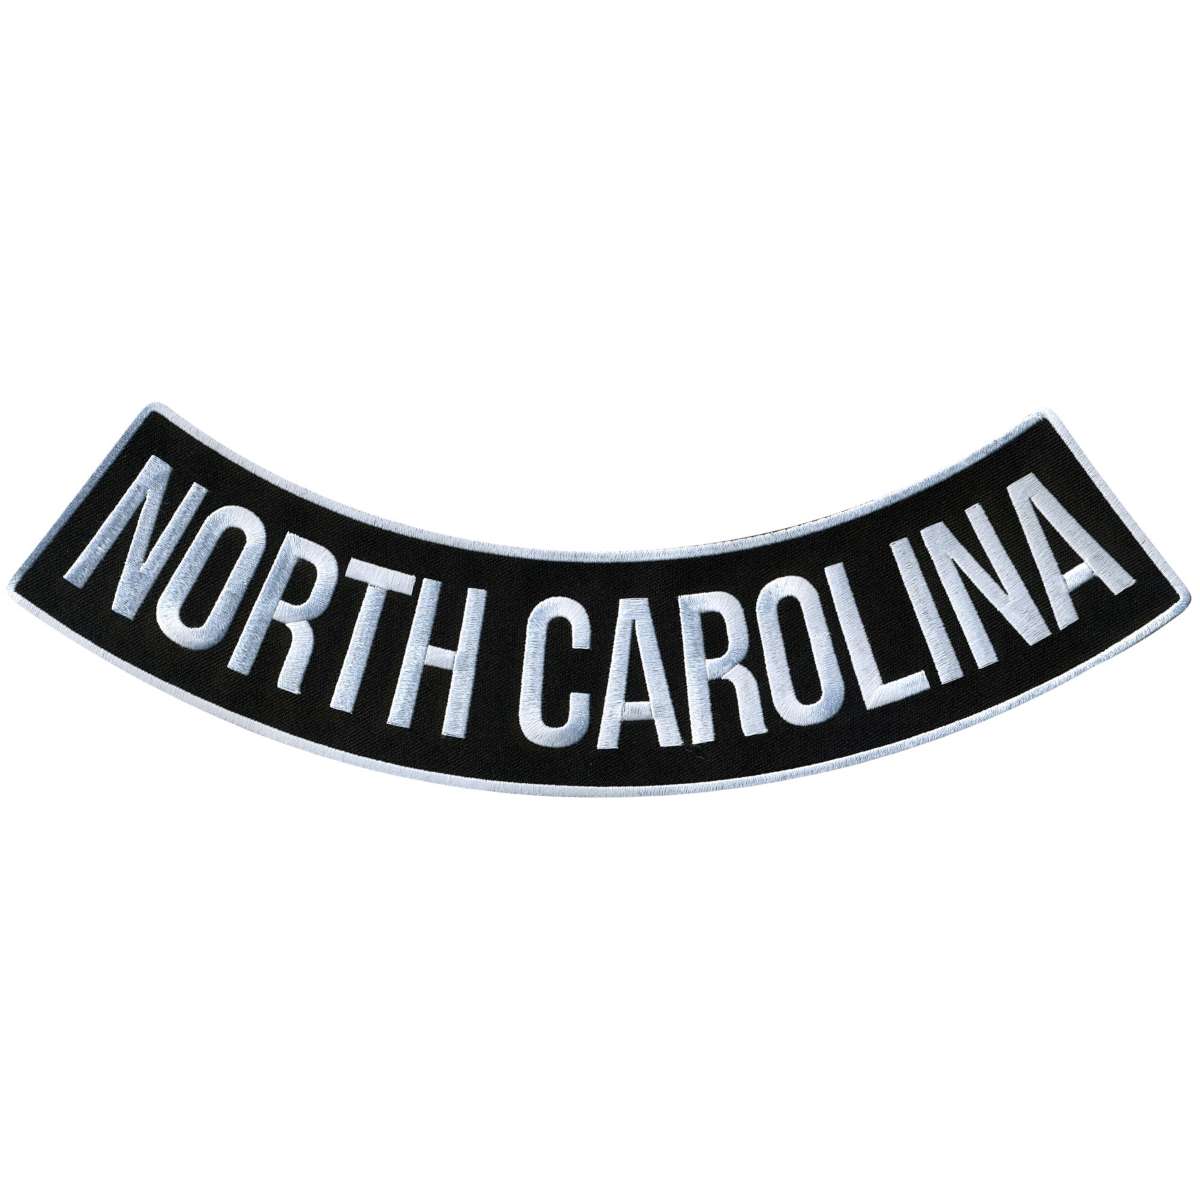 Hot Leathers North Carolina 12” X 3” Bottom Rocker Patch PPM5065